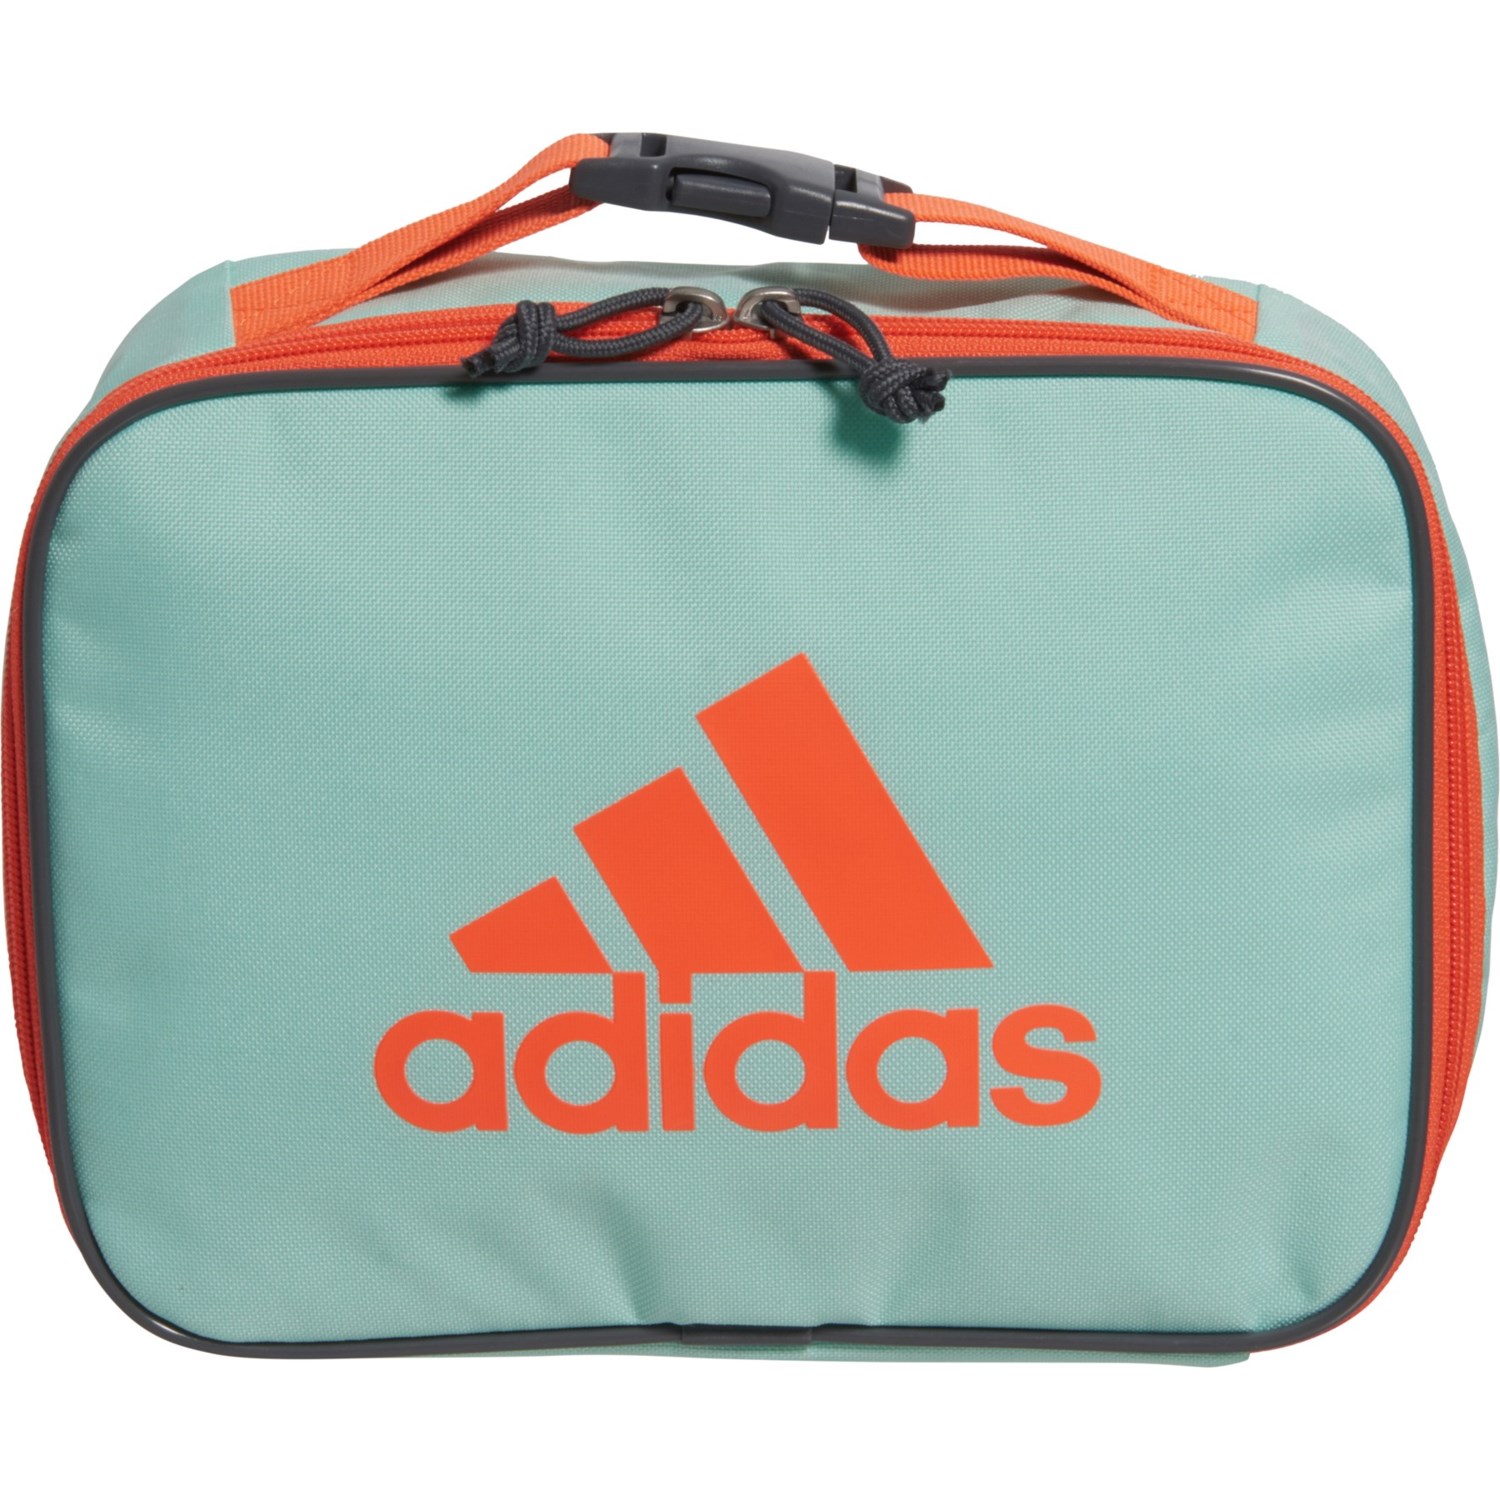 adidas Foundation Lunch Bag - Save 35%